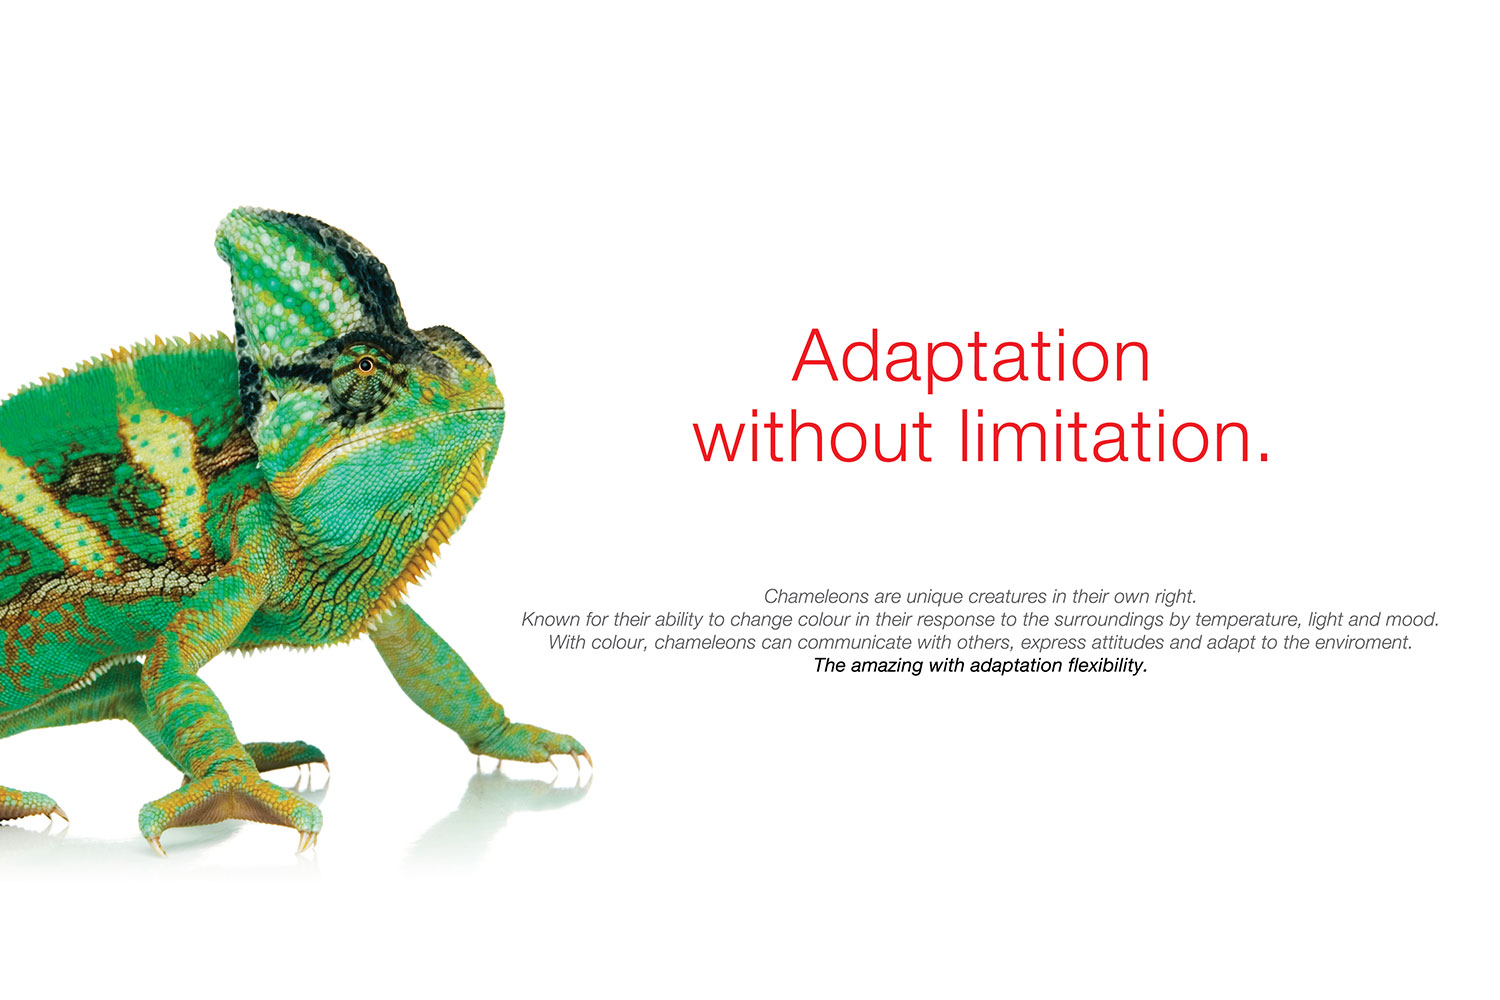 Toshiba campaign - Imagination without limitation